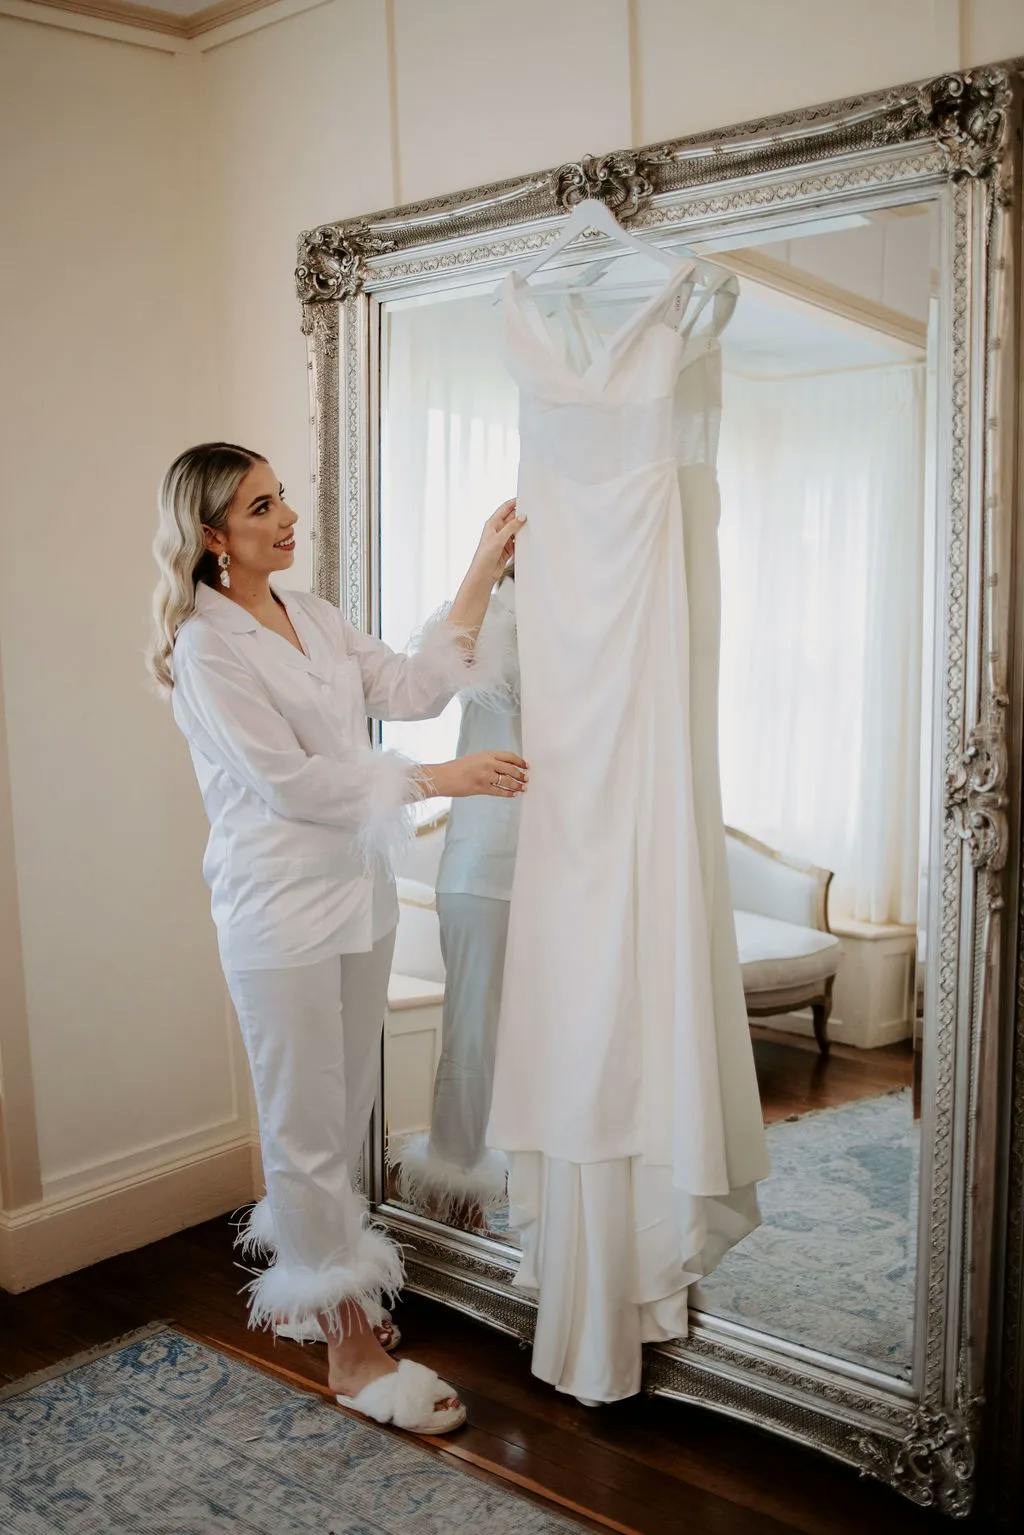 Bride looking at wedding dress hanging on mirror